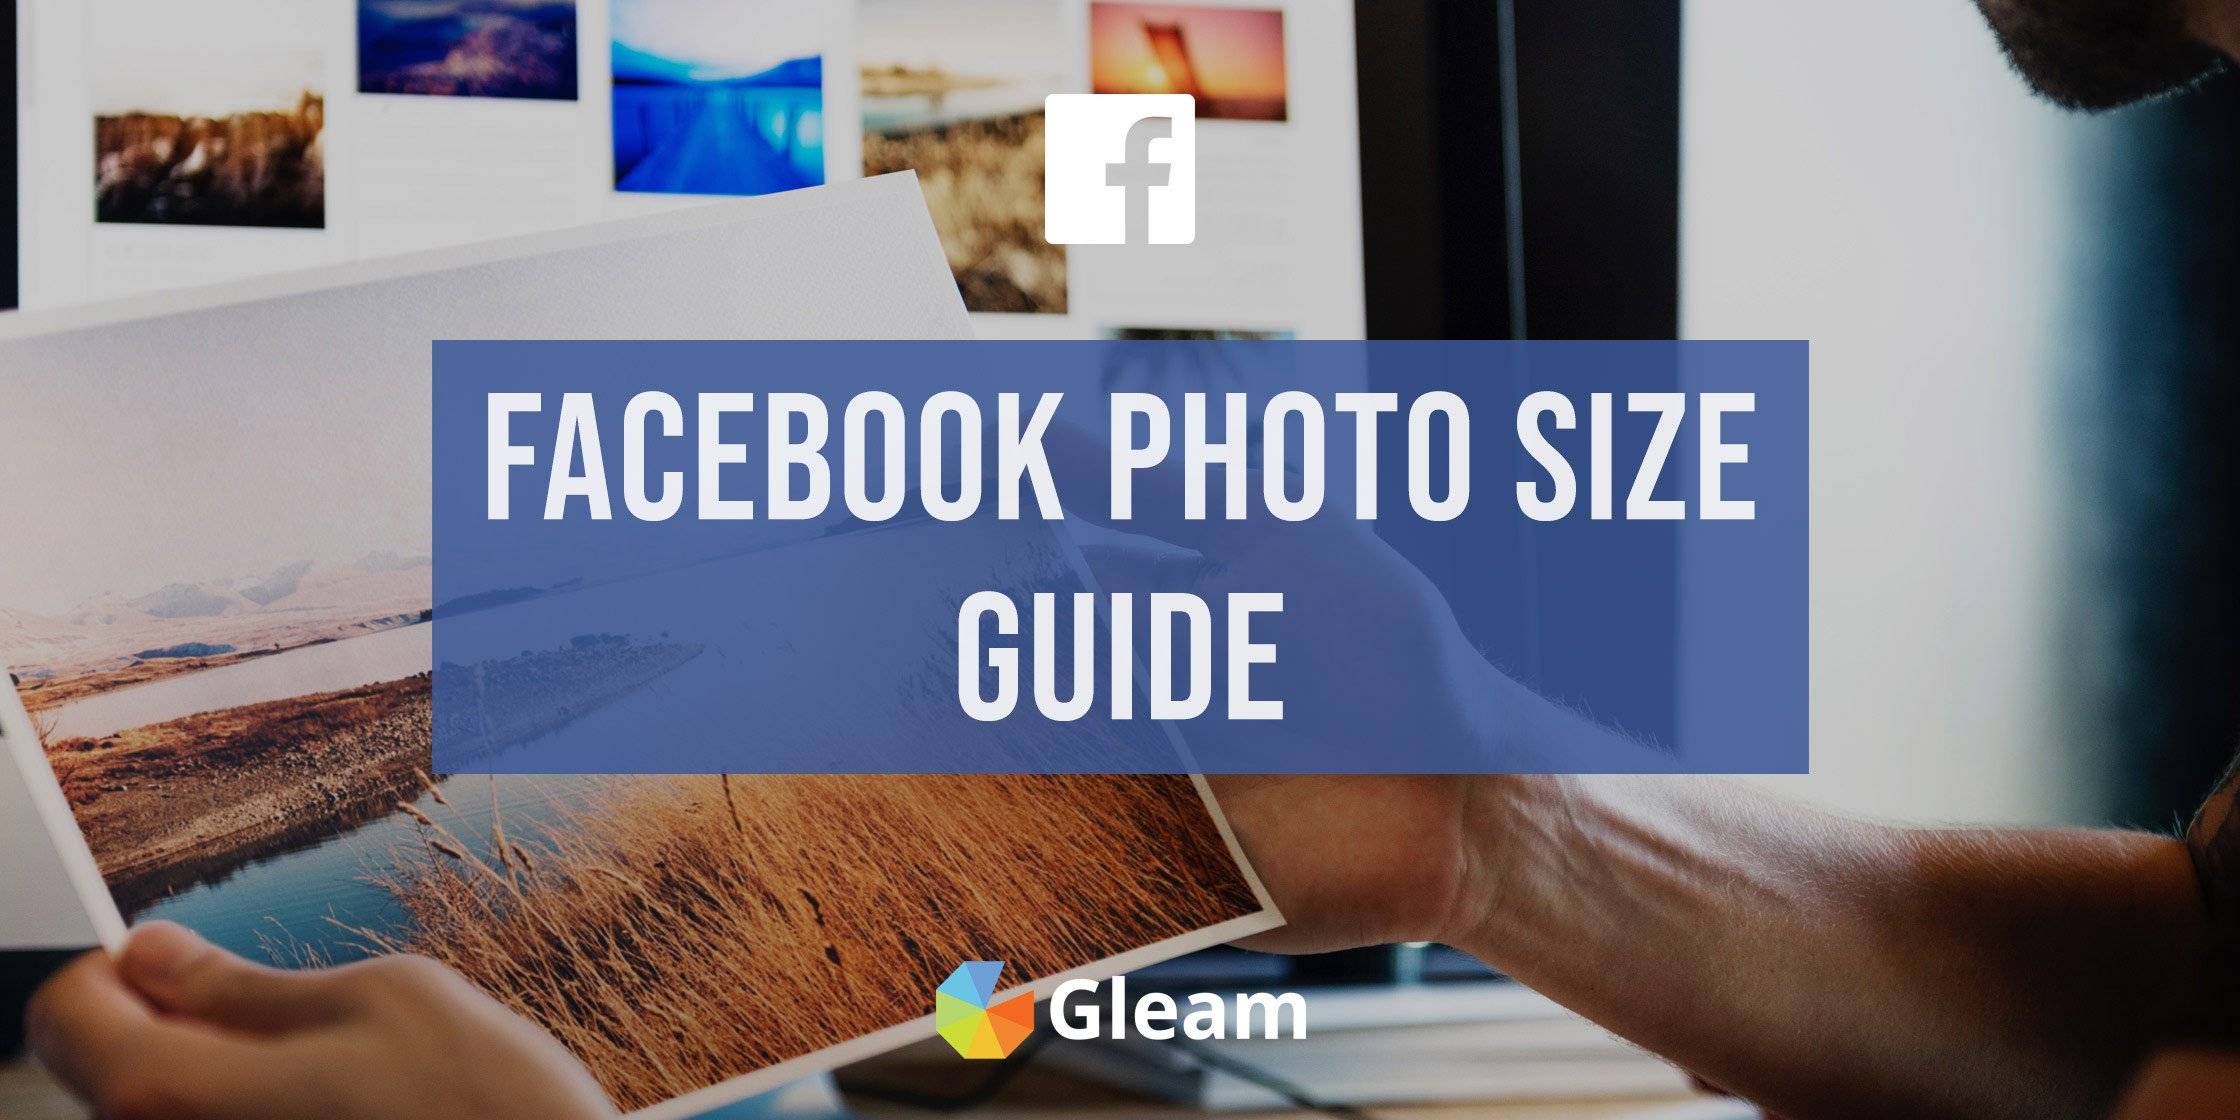 Facebook photo size guide. Gleam